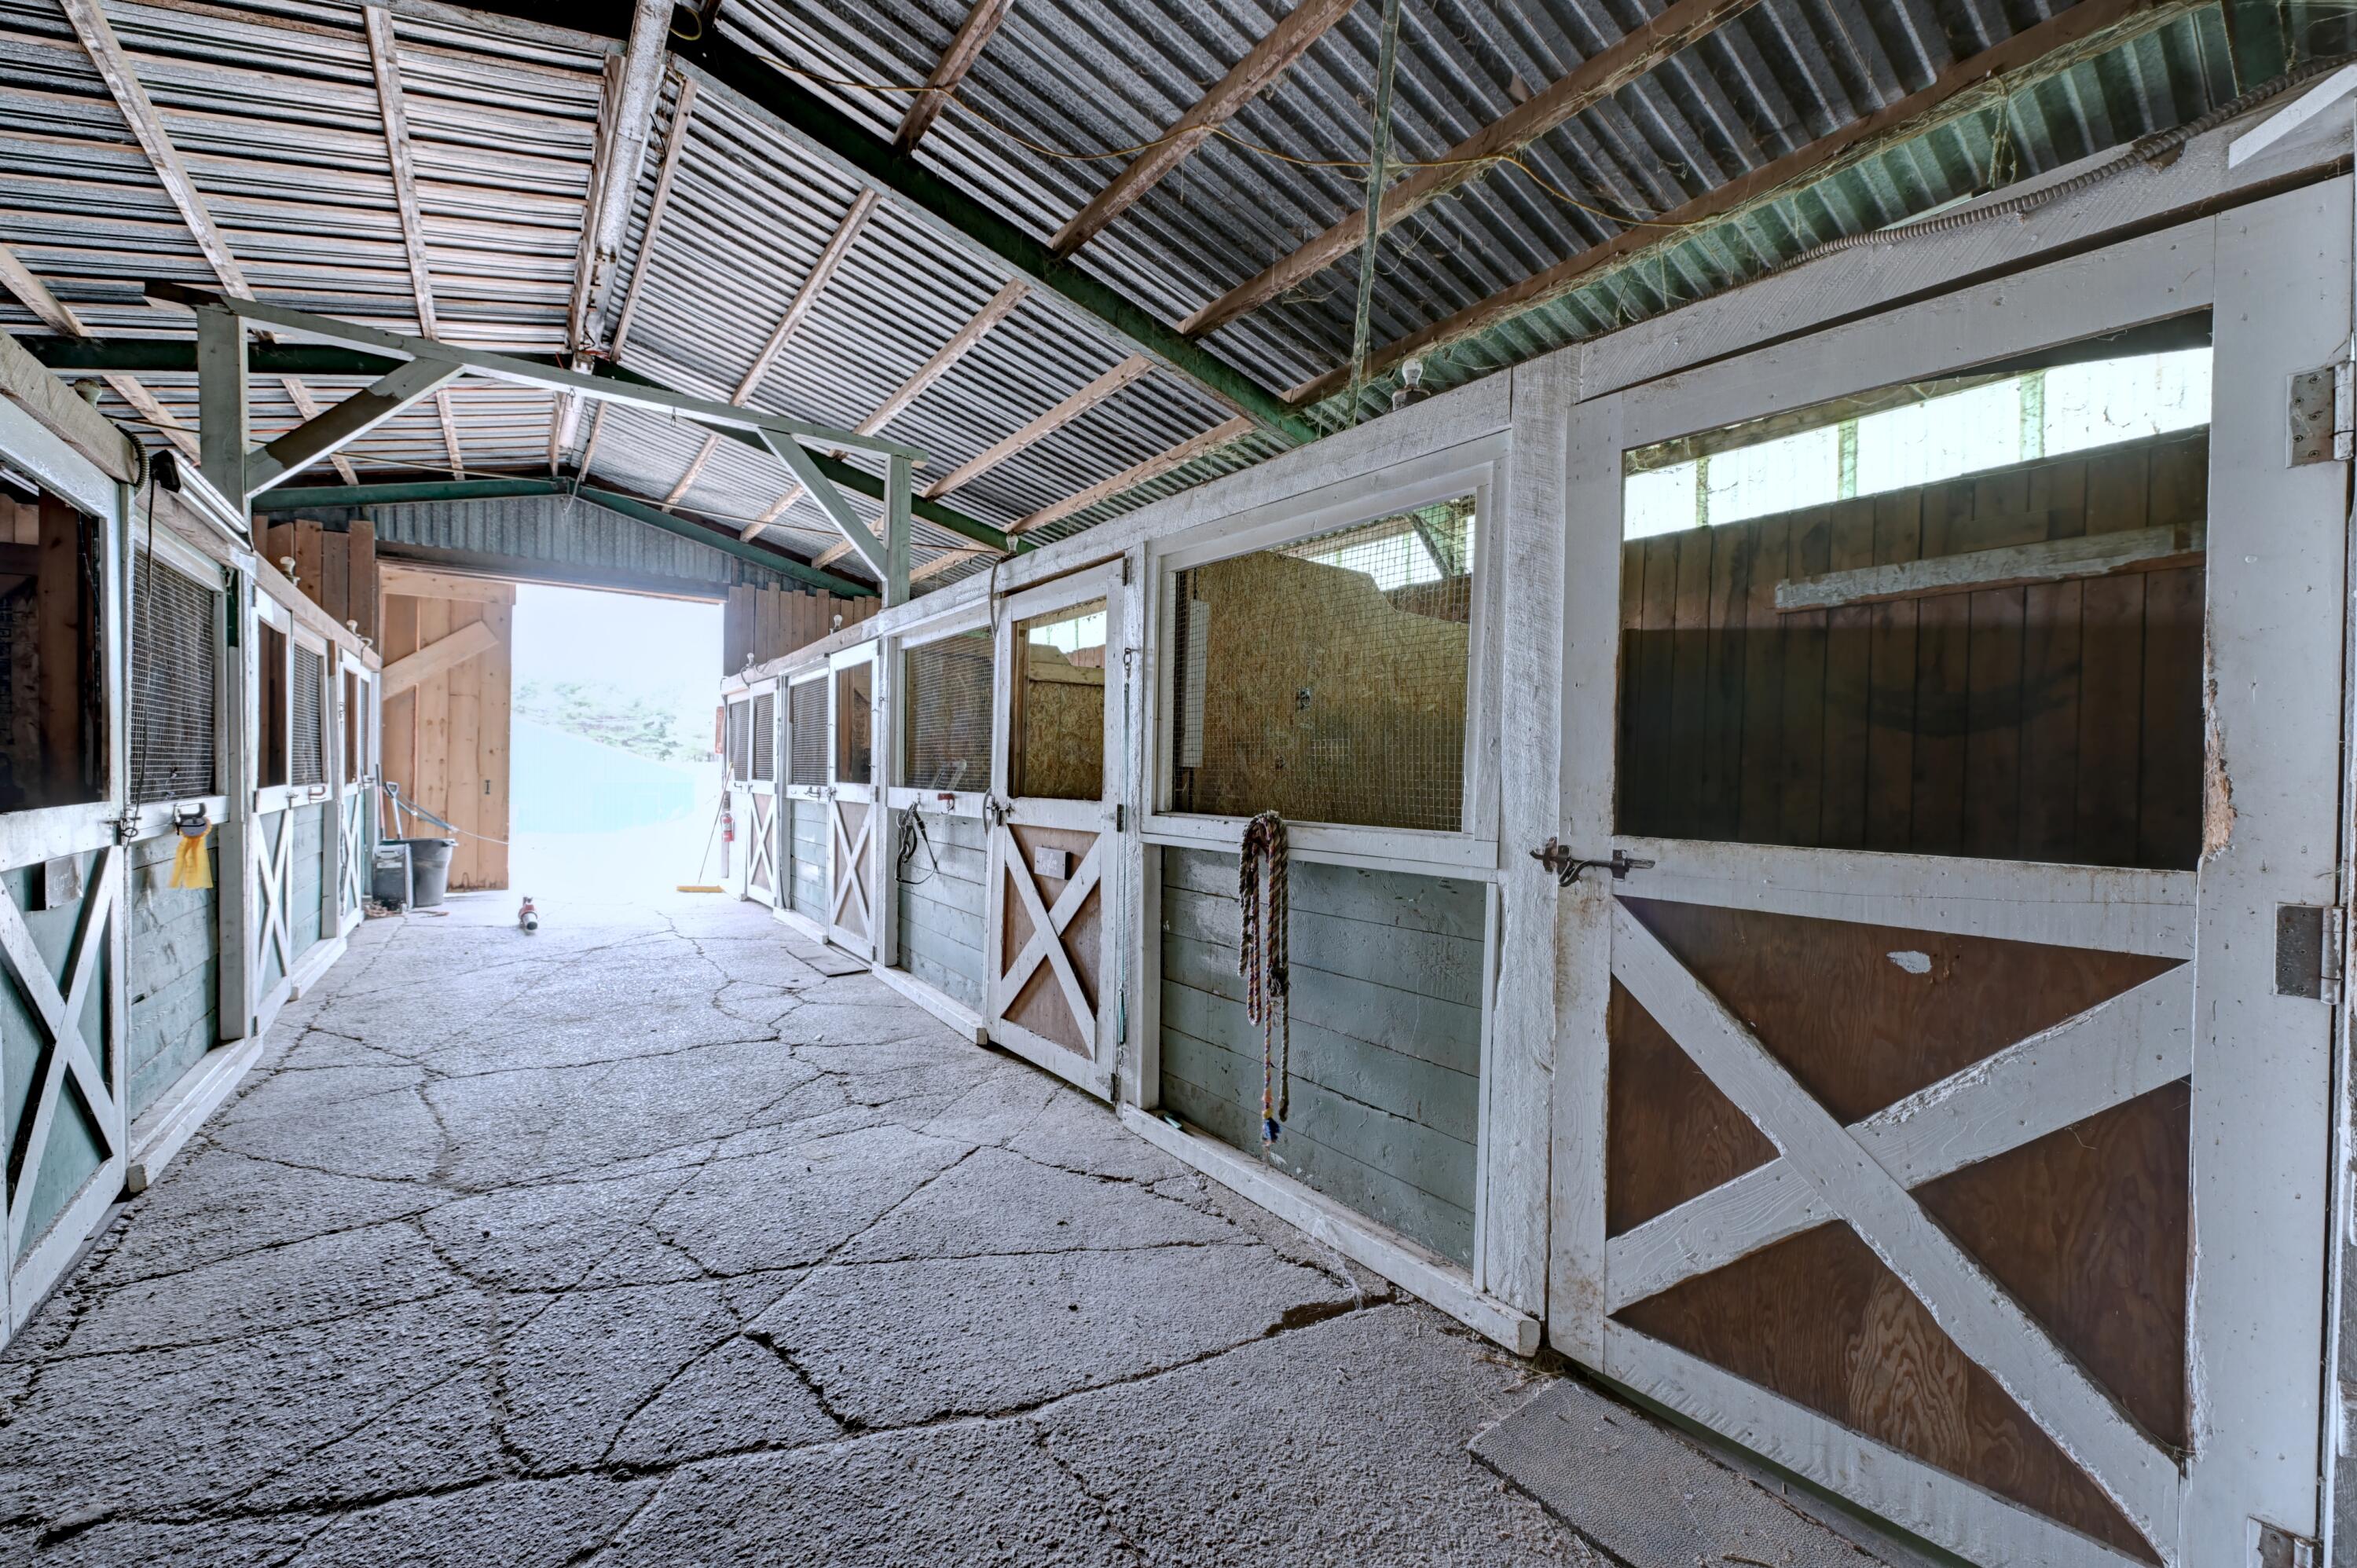 Inside Main Barn